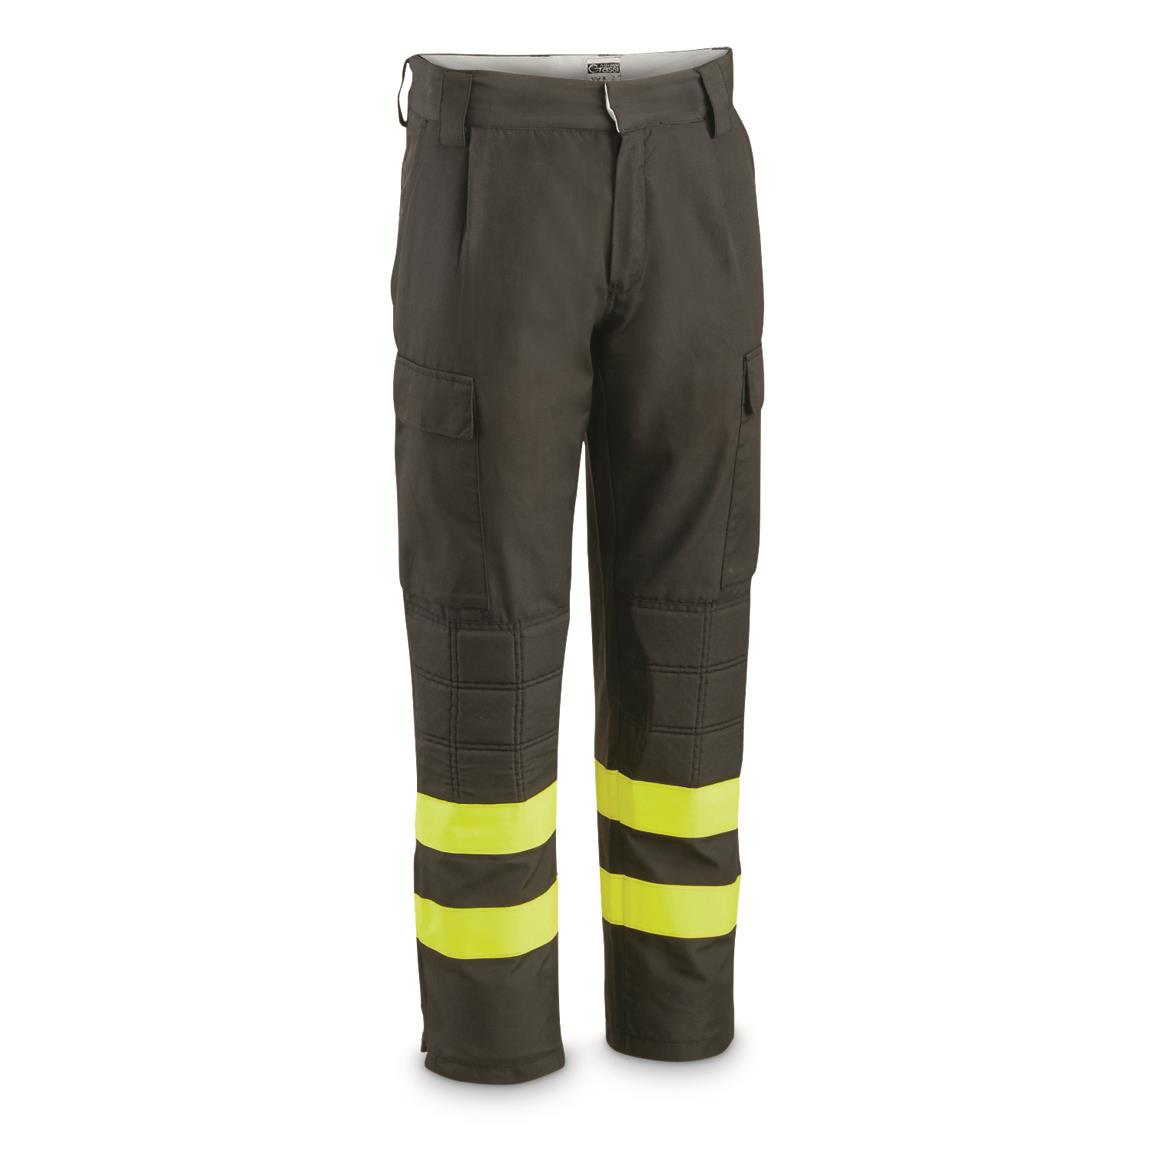 Italian Fire Service Surplus Aramid Firefighter Pants, New